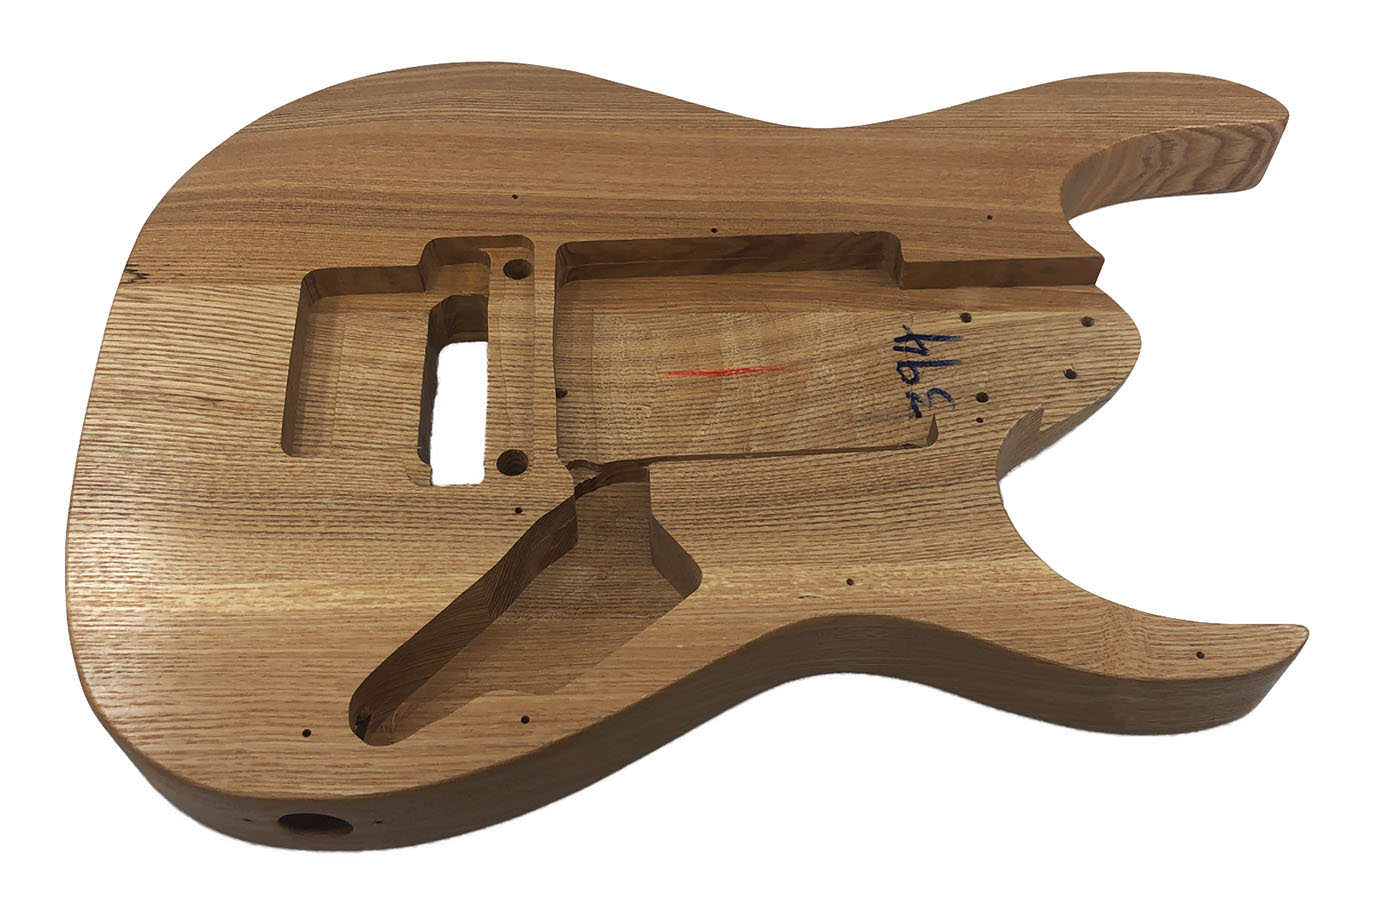 Solo JEK-7 DIY 7 String Electric Guitar Kit With Vine Inlay /& Floyd Rose